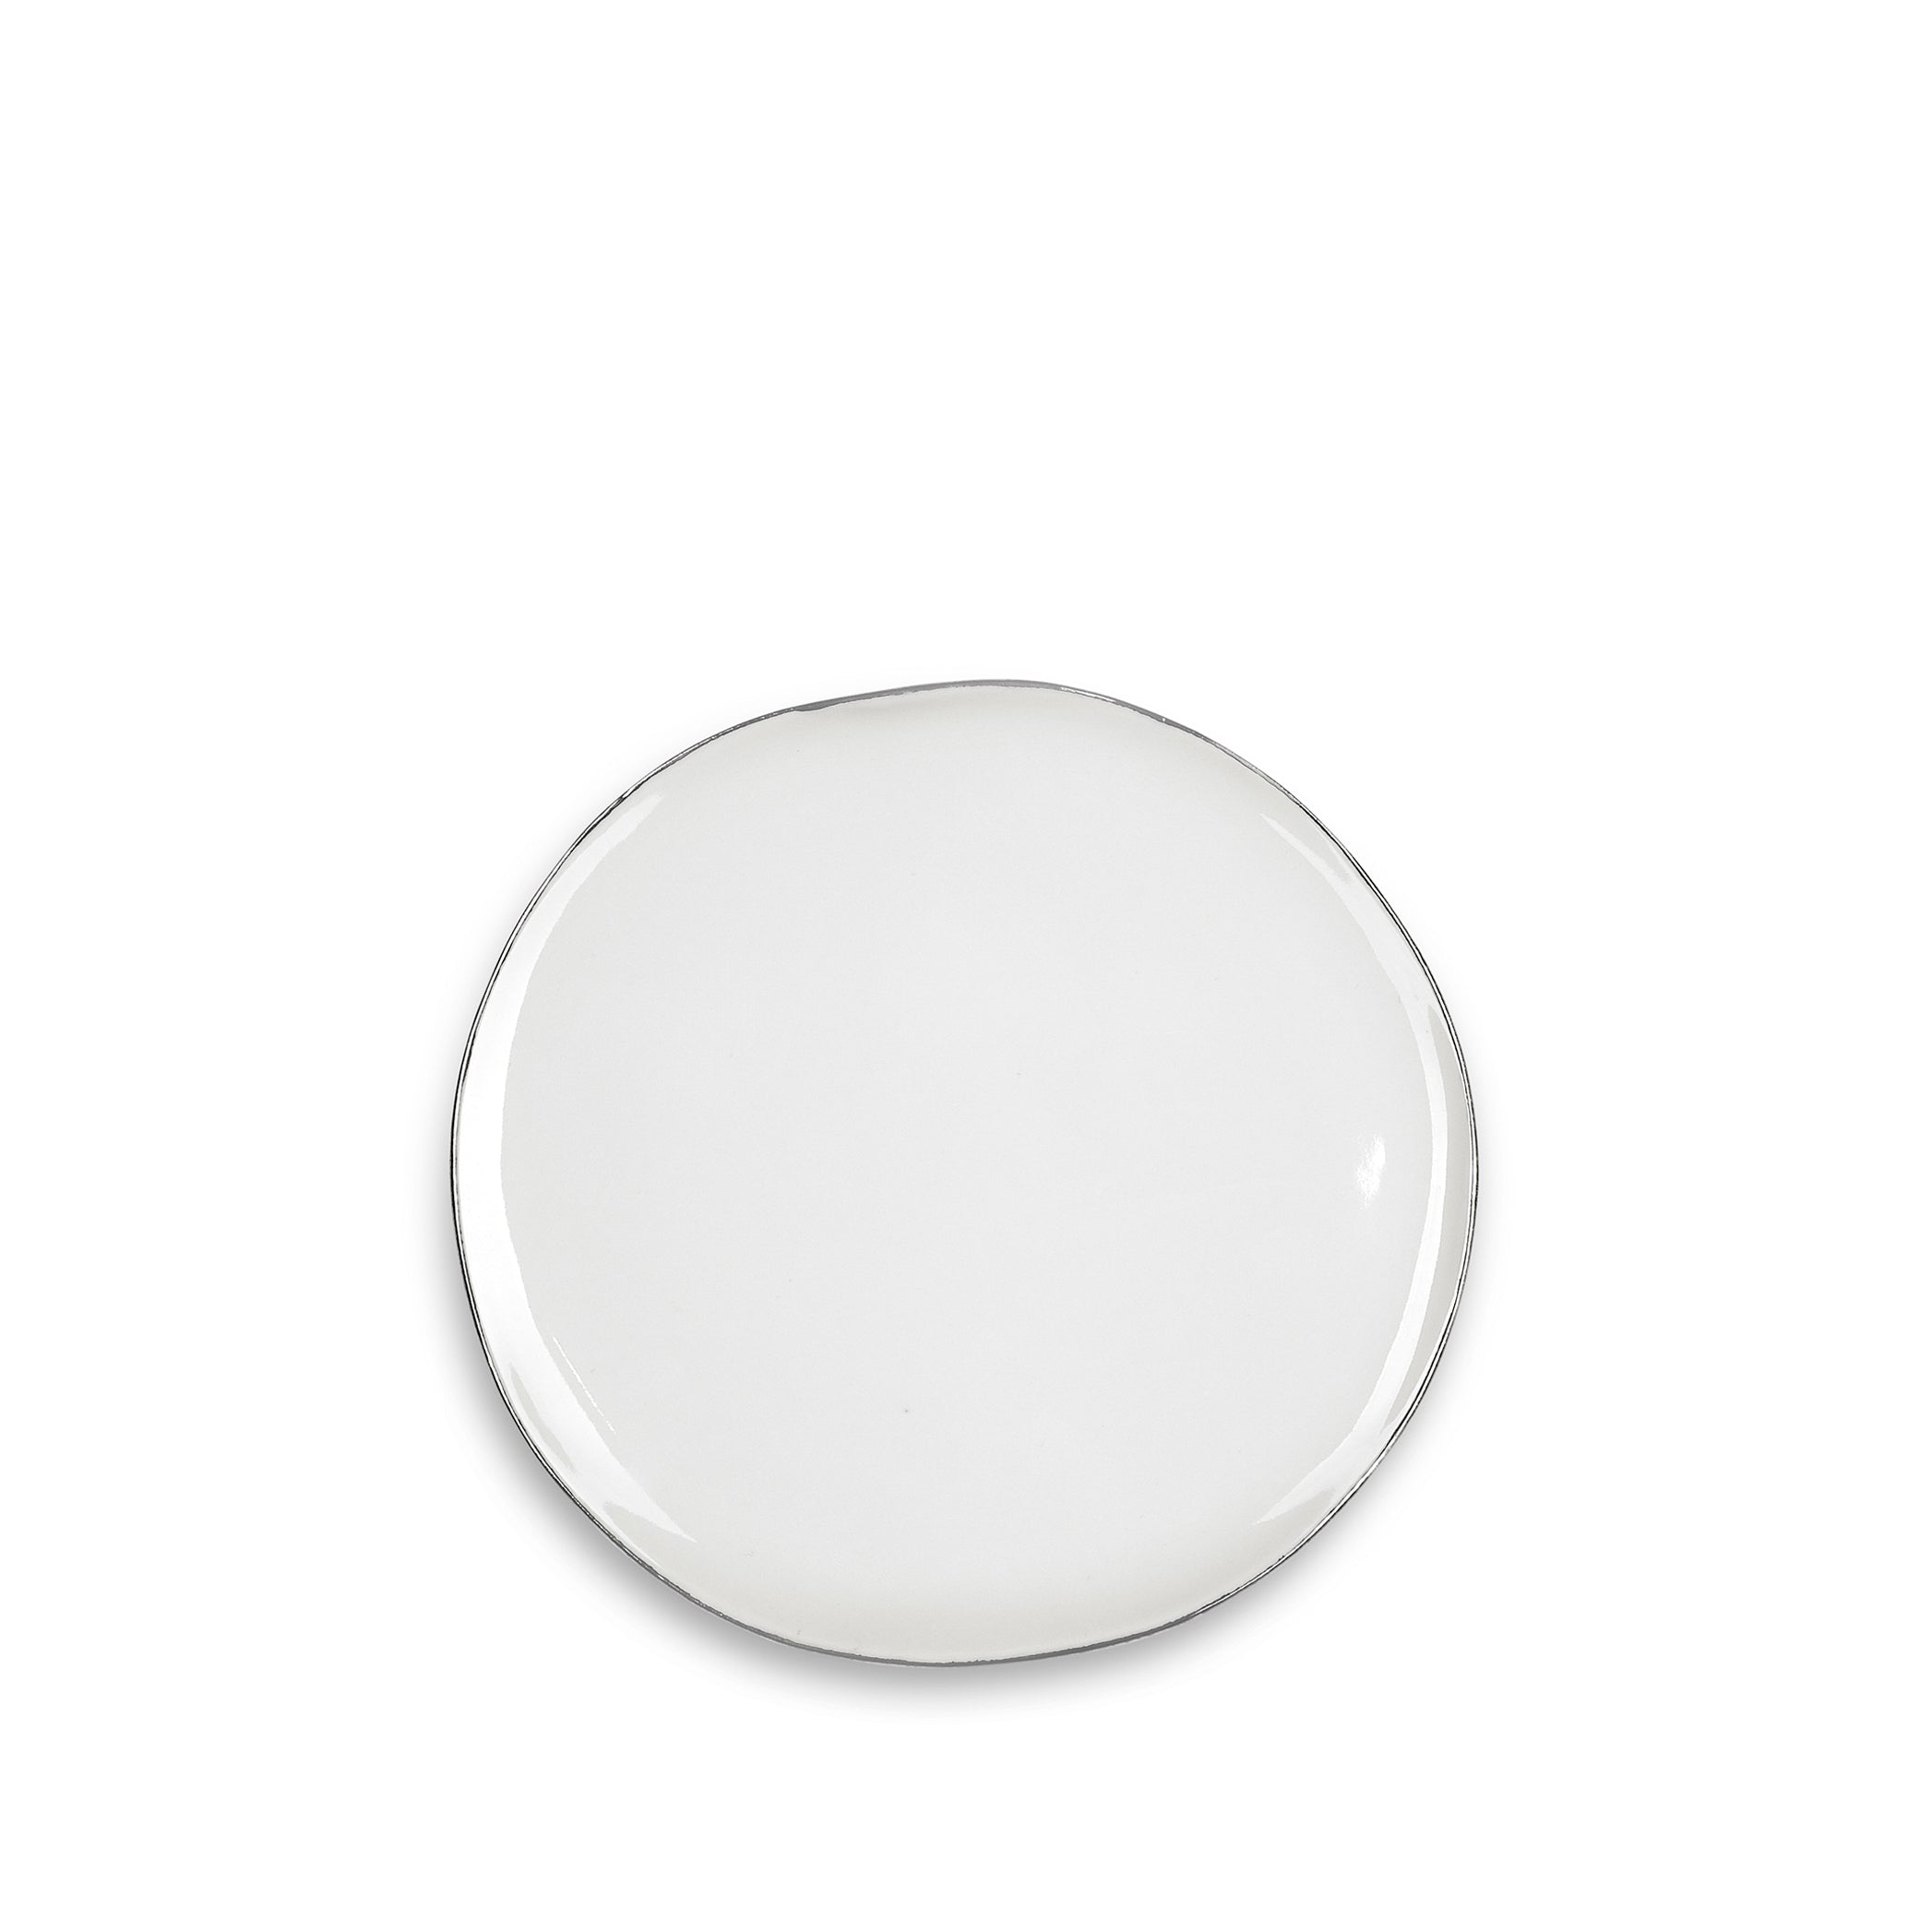 Summerill & Bishop Handmade 20cm Porcelain Side Plate with Silver Rim